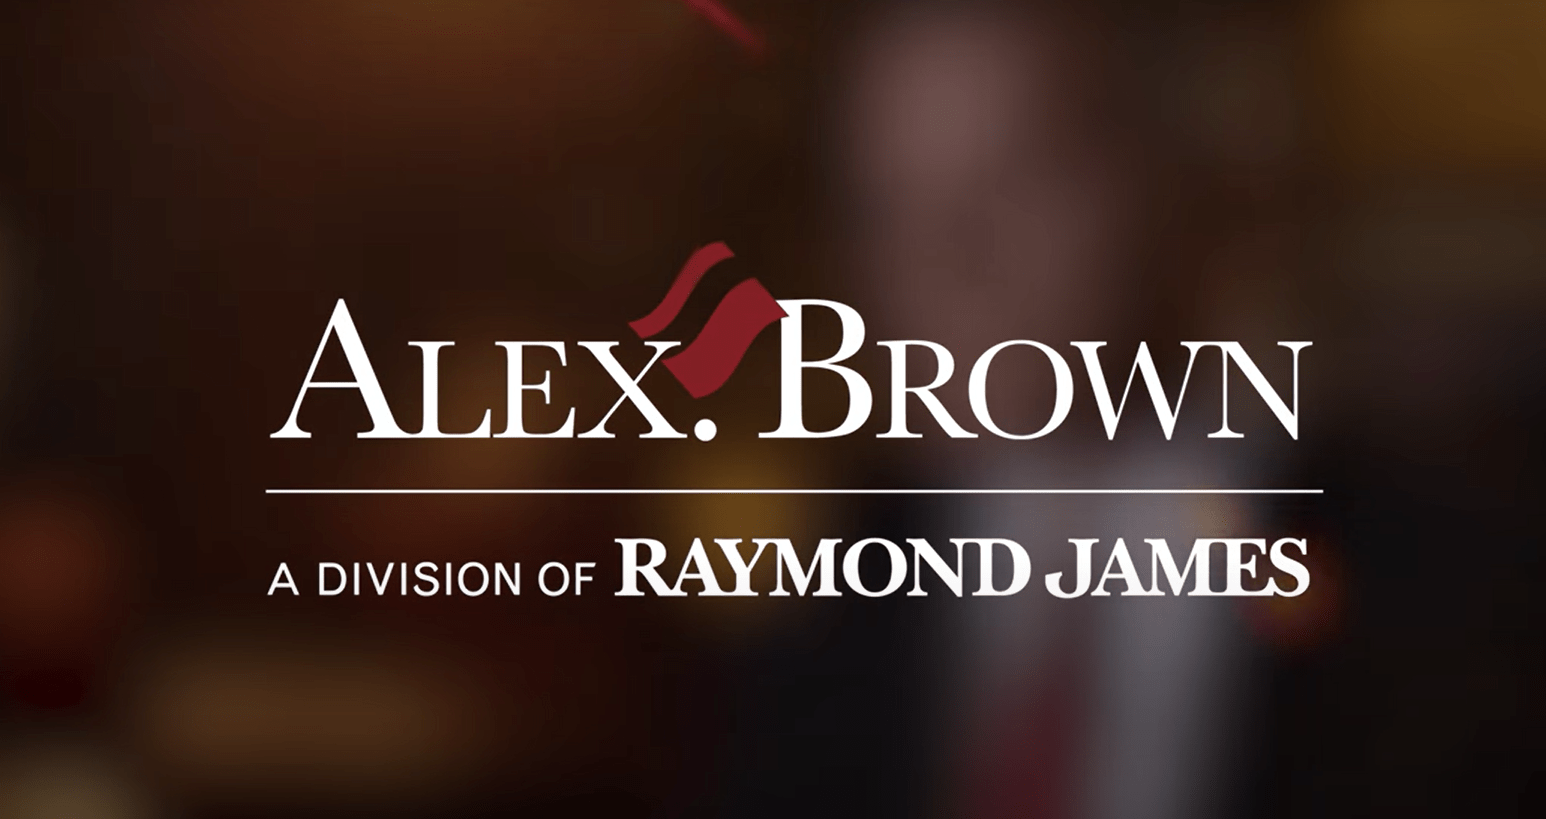 Craig Decker on Alex. Brown, a Division of Raymond James